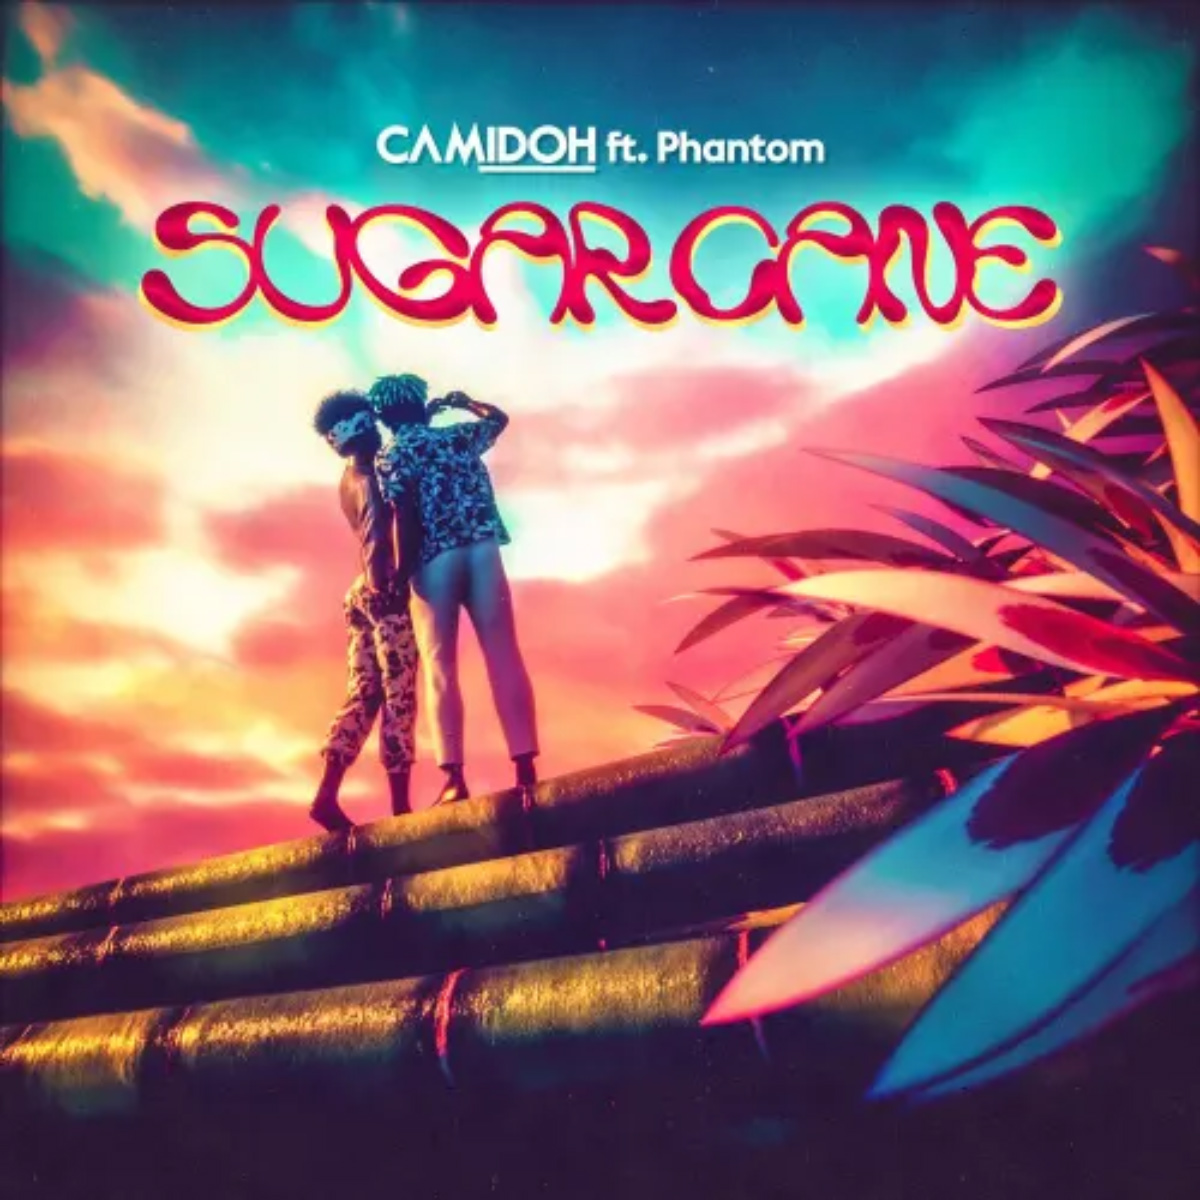 Sugarcane by Camidoh feat. Phantom